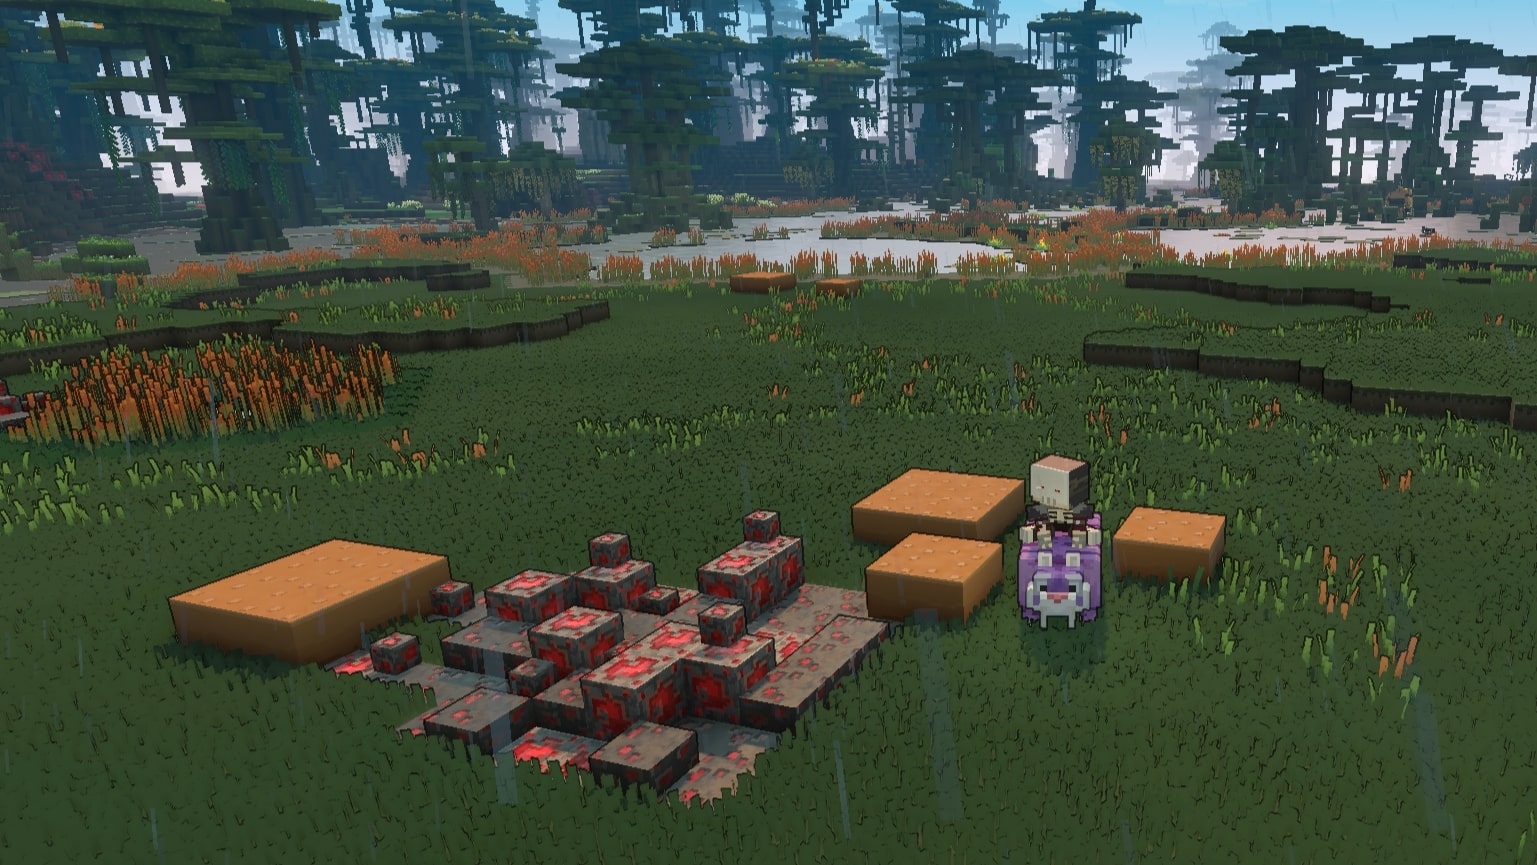 Redstone Endermite Minecraft Mob Skin